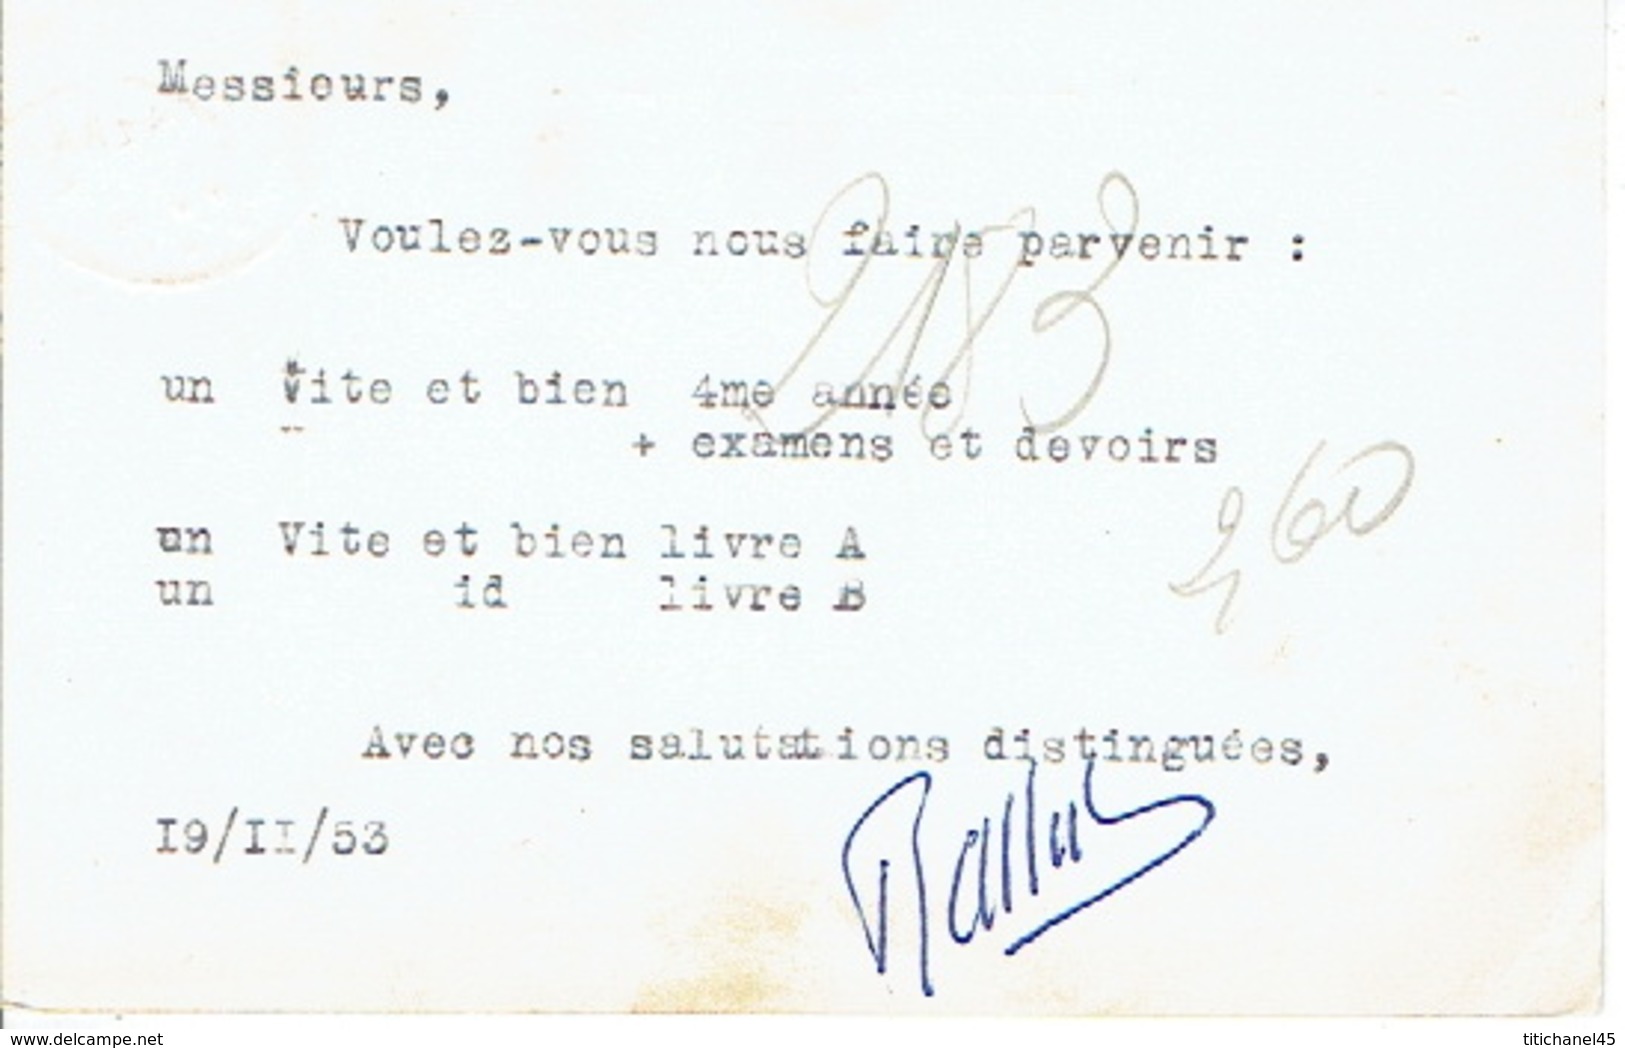 CP Publicitaire FELUY 1953 - LIBRAIRIE ABBEELS - Seneffe